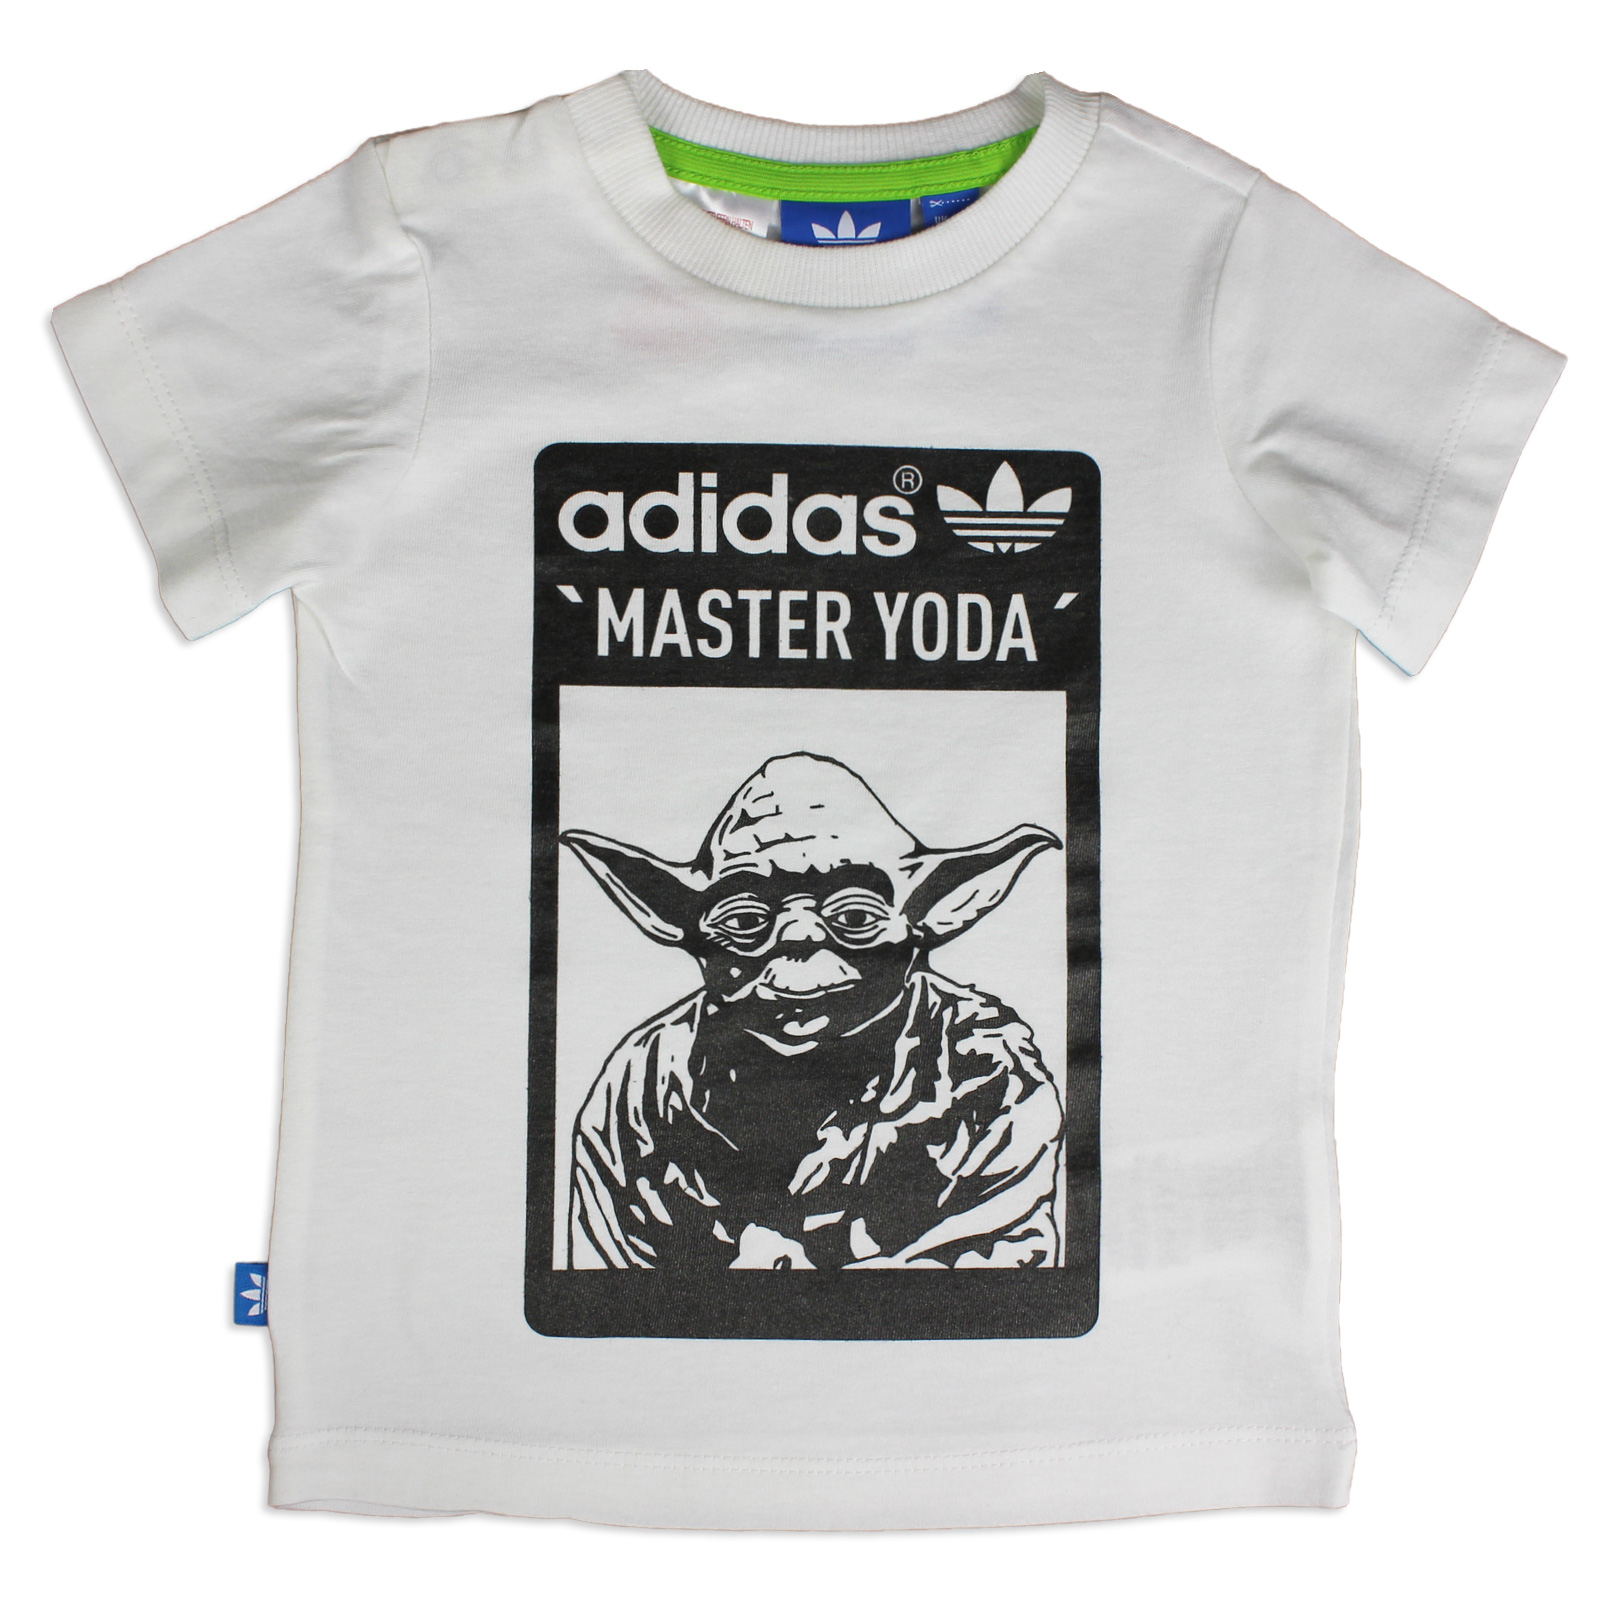 Adidas Originals Star Wars Maestro Yoda Jedi Maestro T-Shirt Bianco | eBay